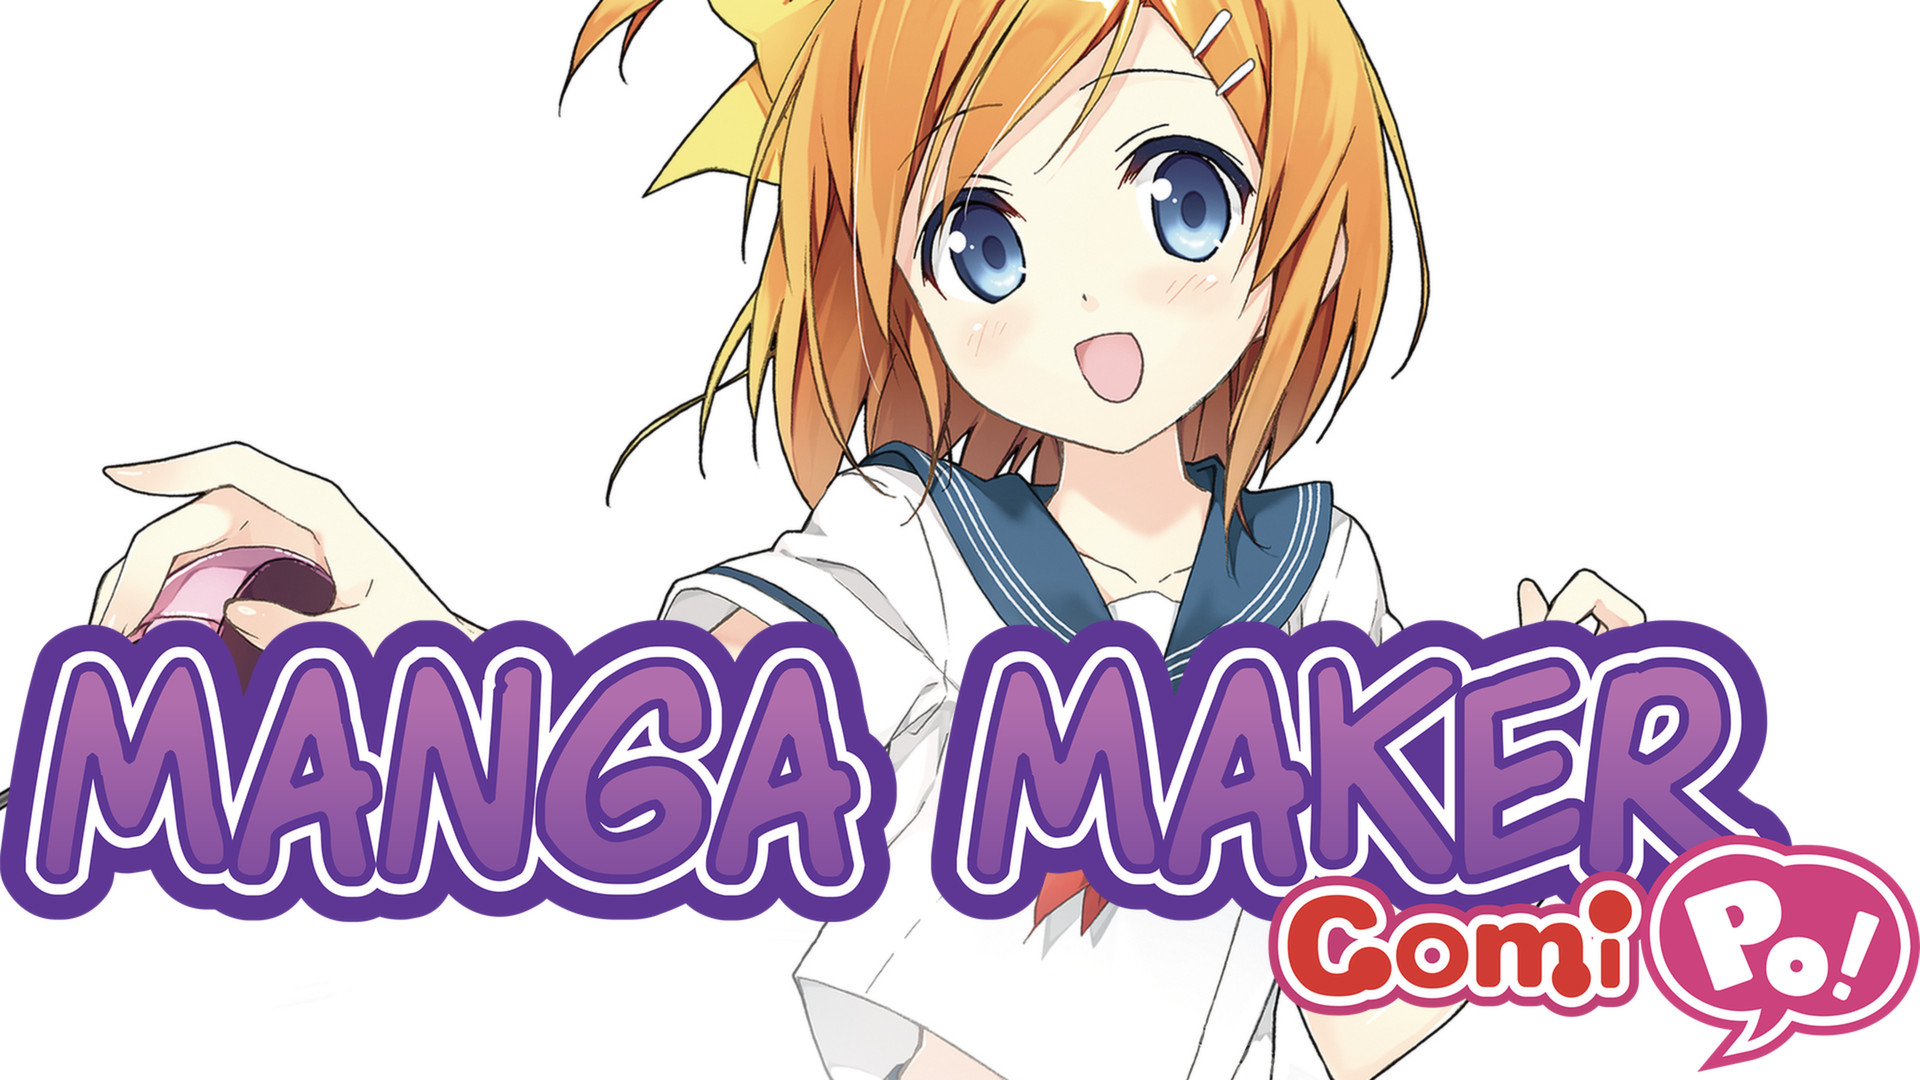 manga maker comipo full torrent